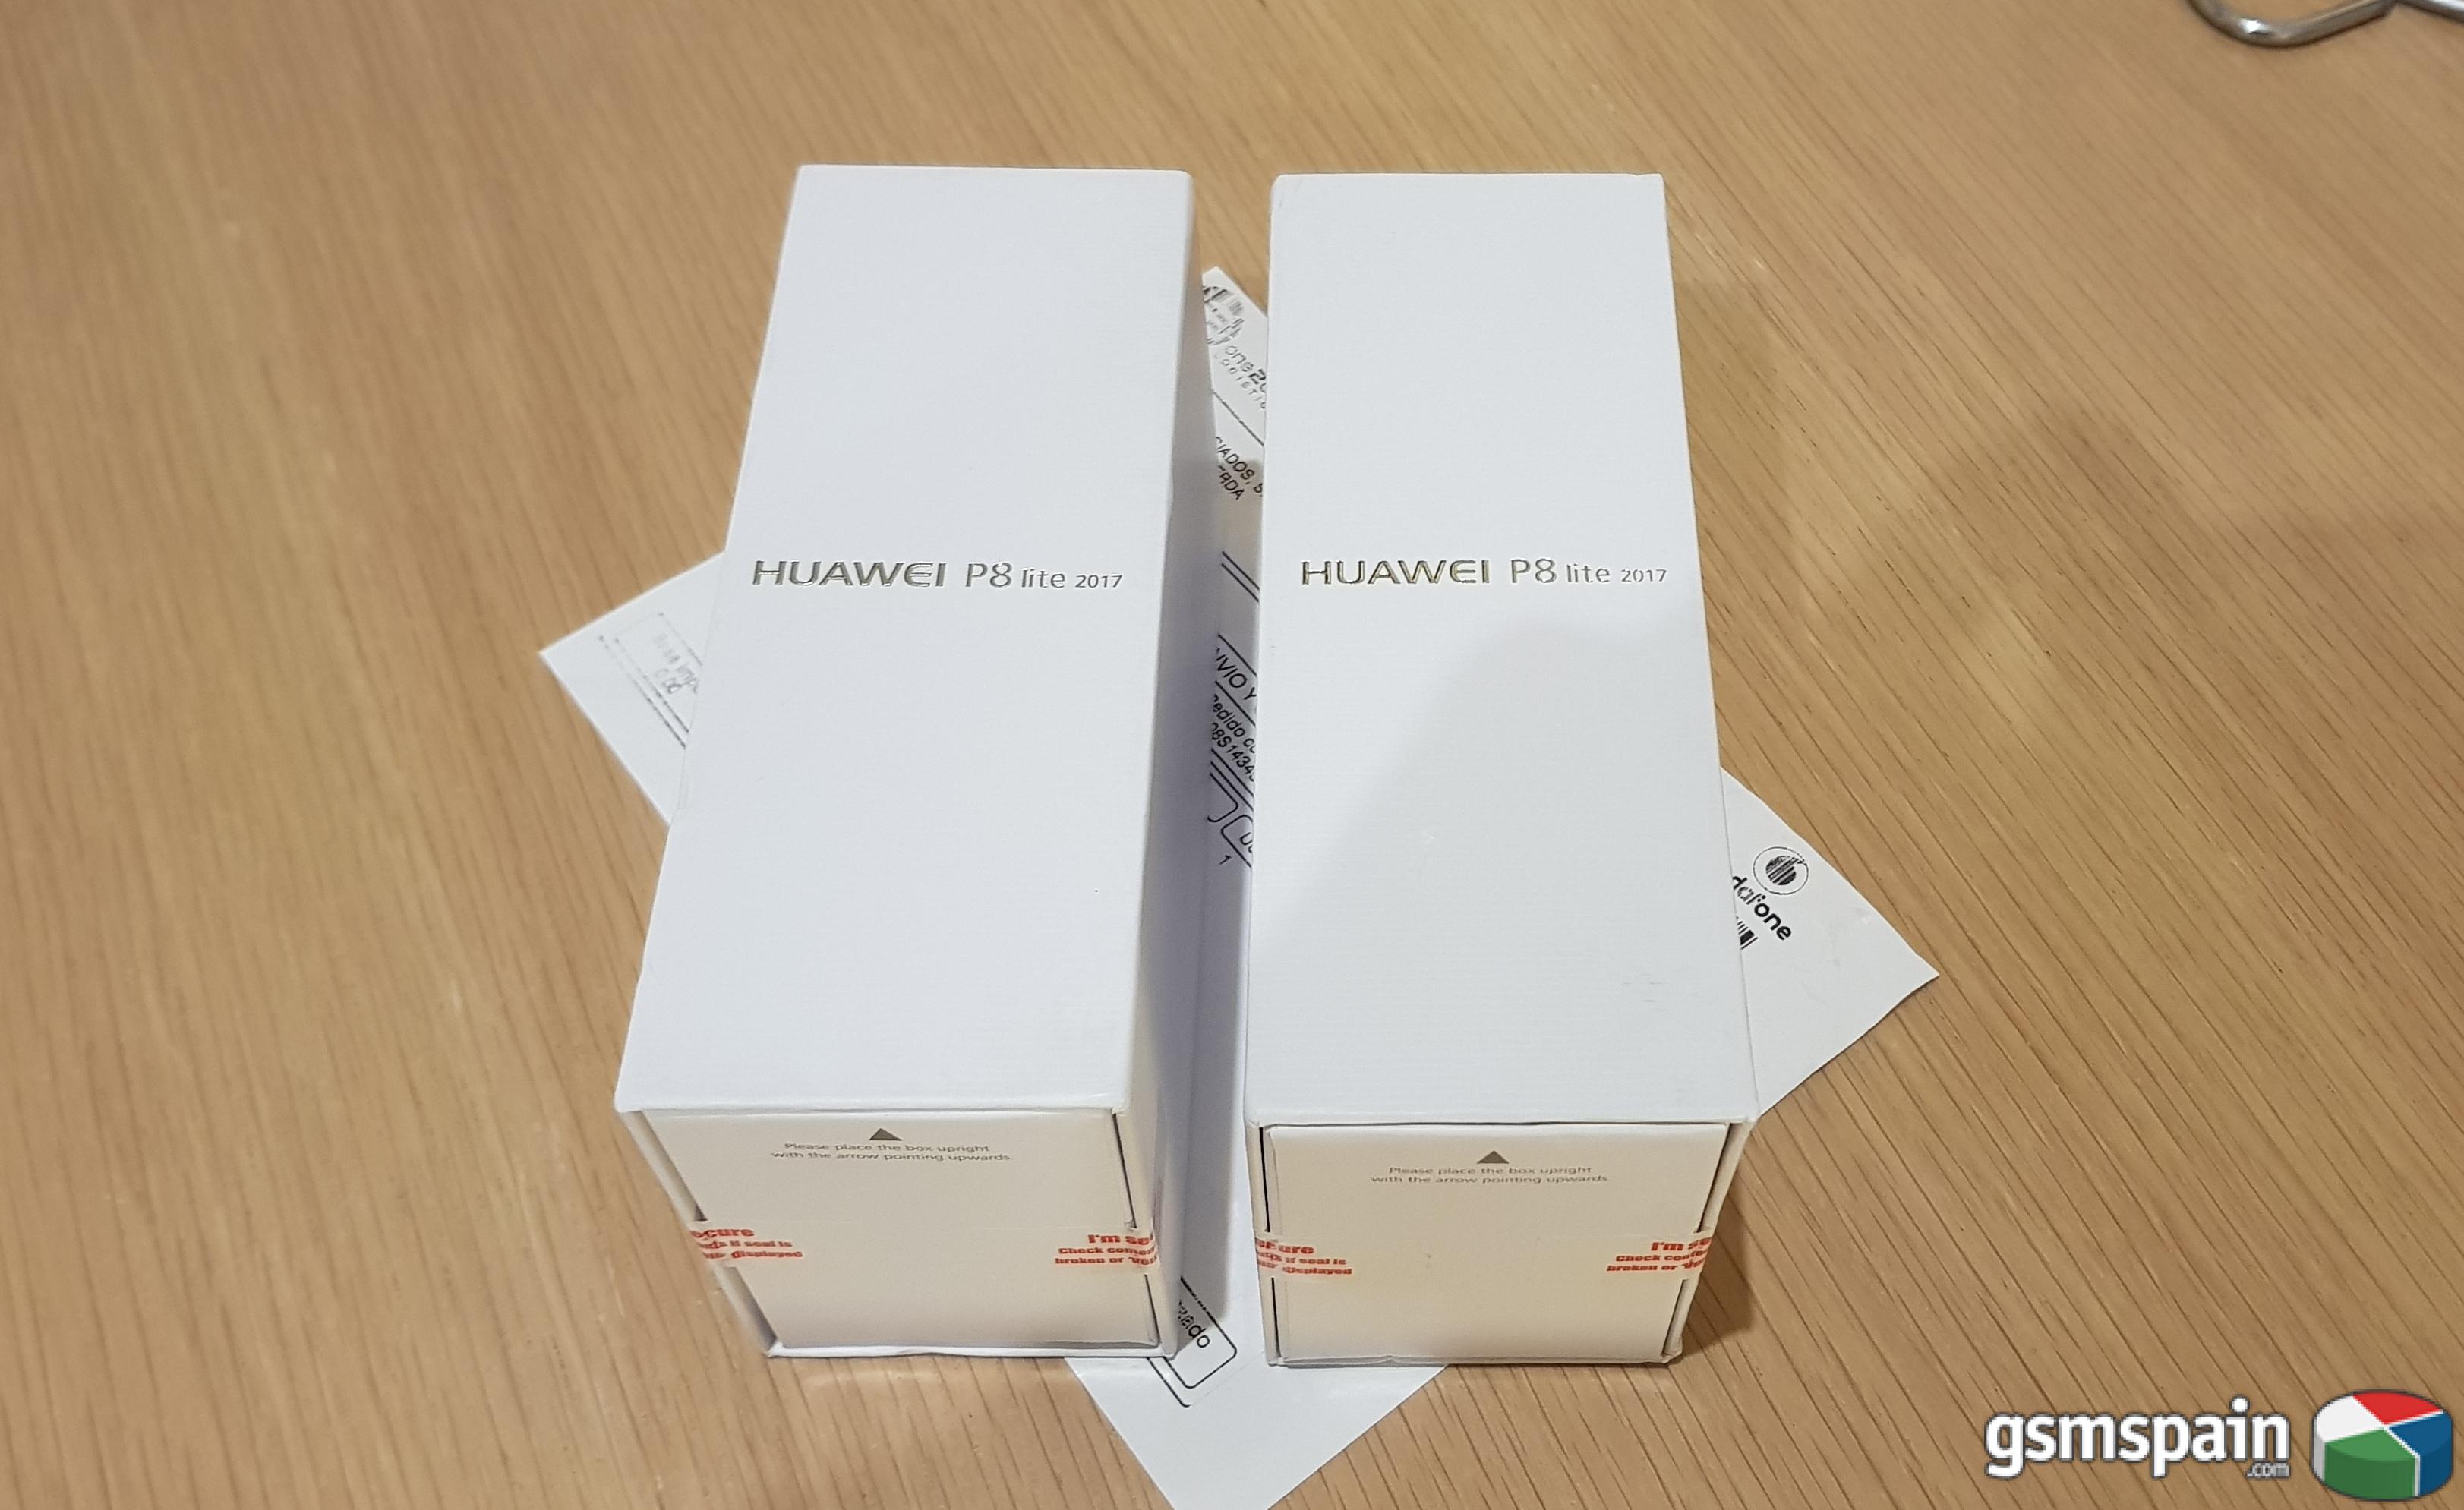 [VENDO] Huawei P8 Lite 2017 Precintado con factura, buen precio (2 unidades)